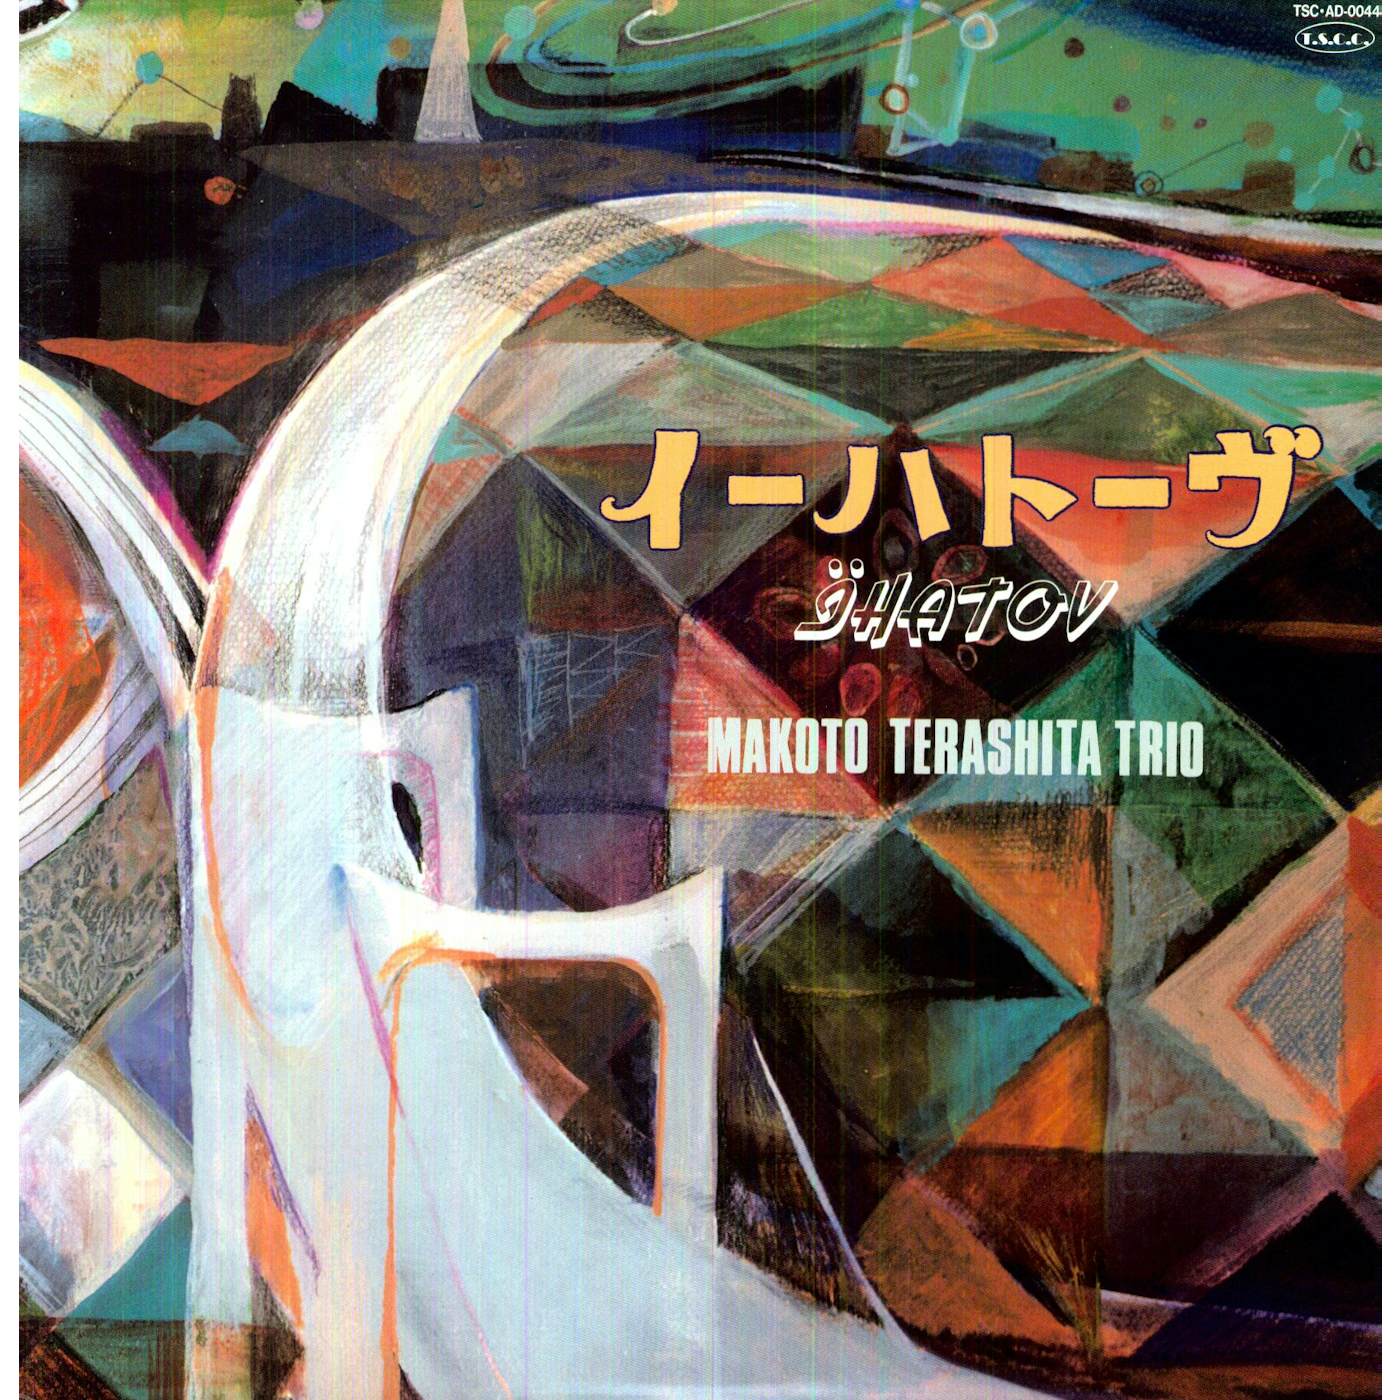 Makoto Terashita IHATOV Vinyl Record